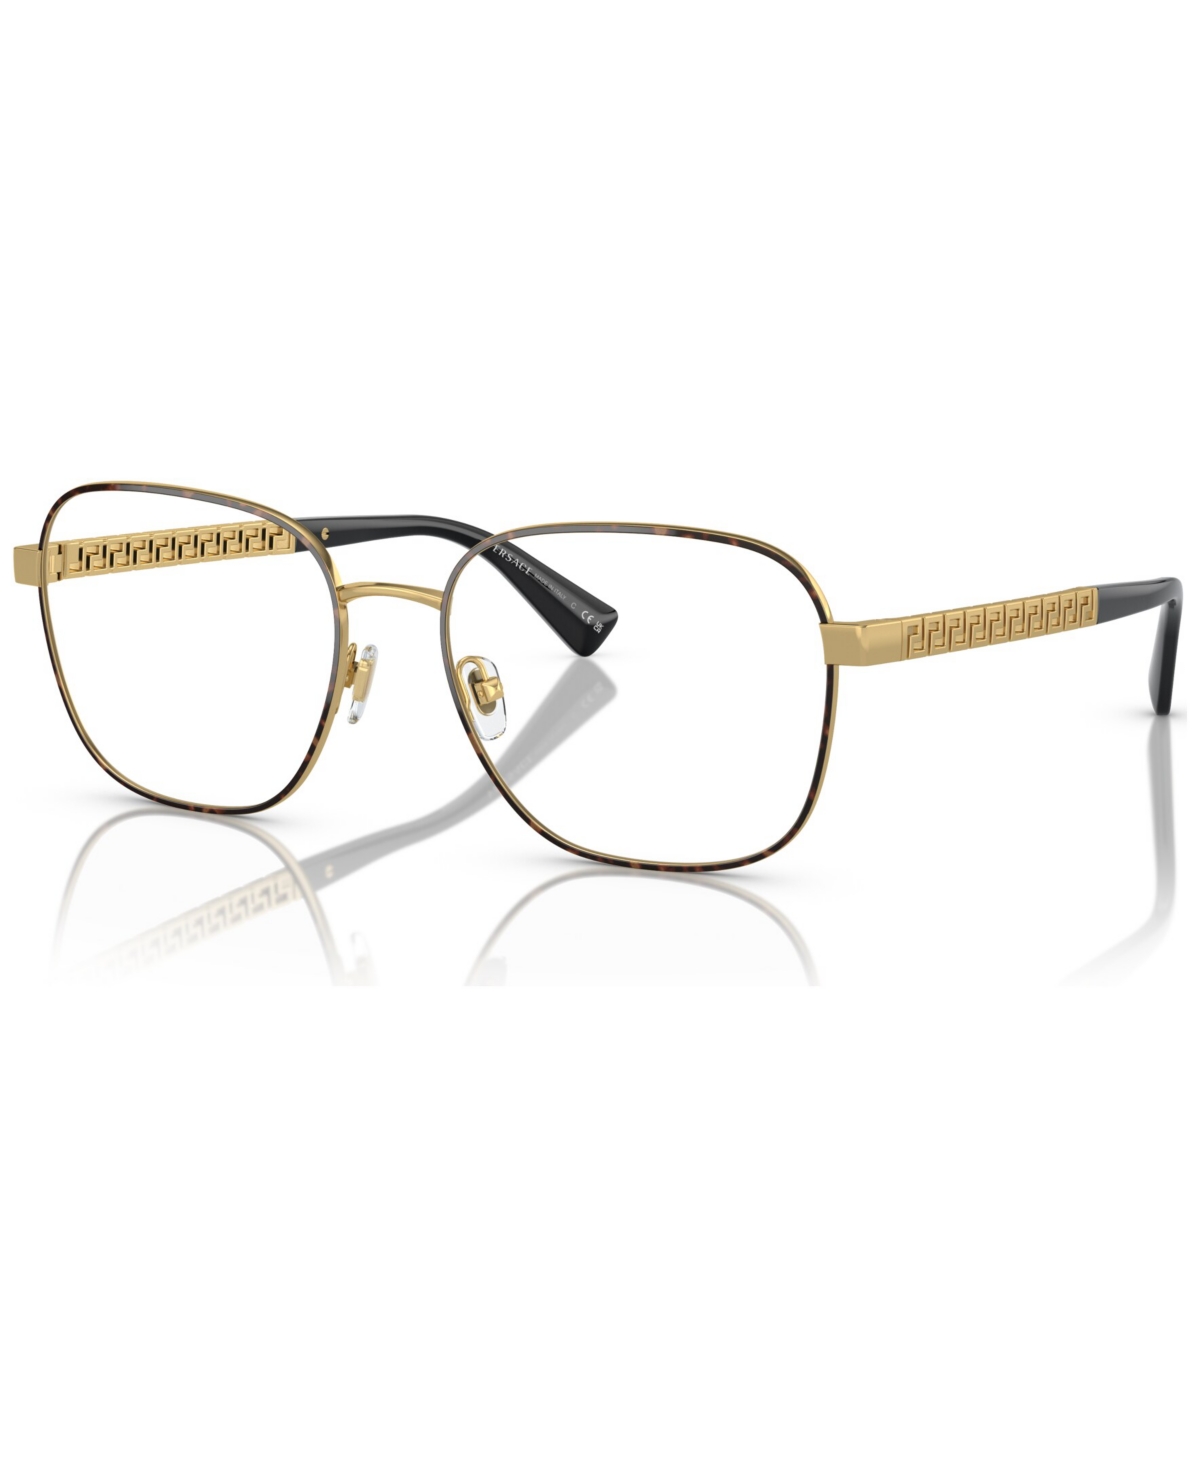 Men's Phantos Eyeglasses, VE1290 56 - Havana, Gold-Tone